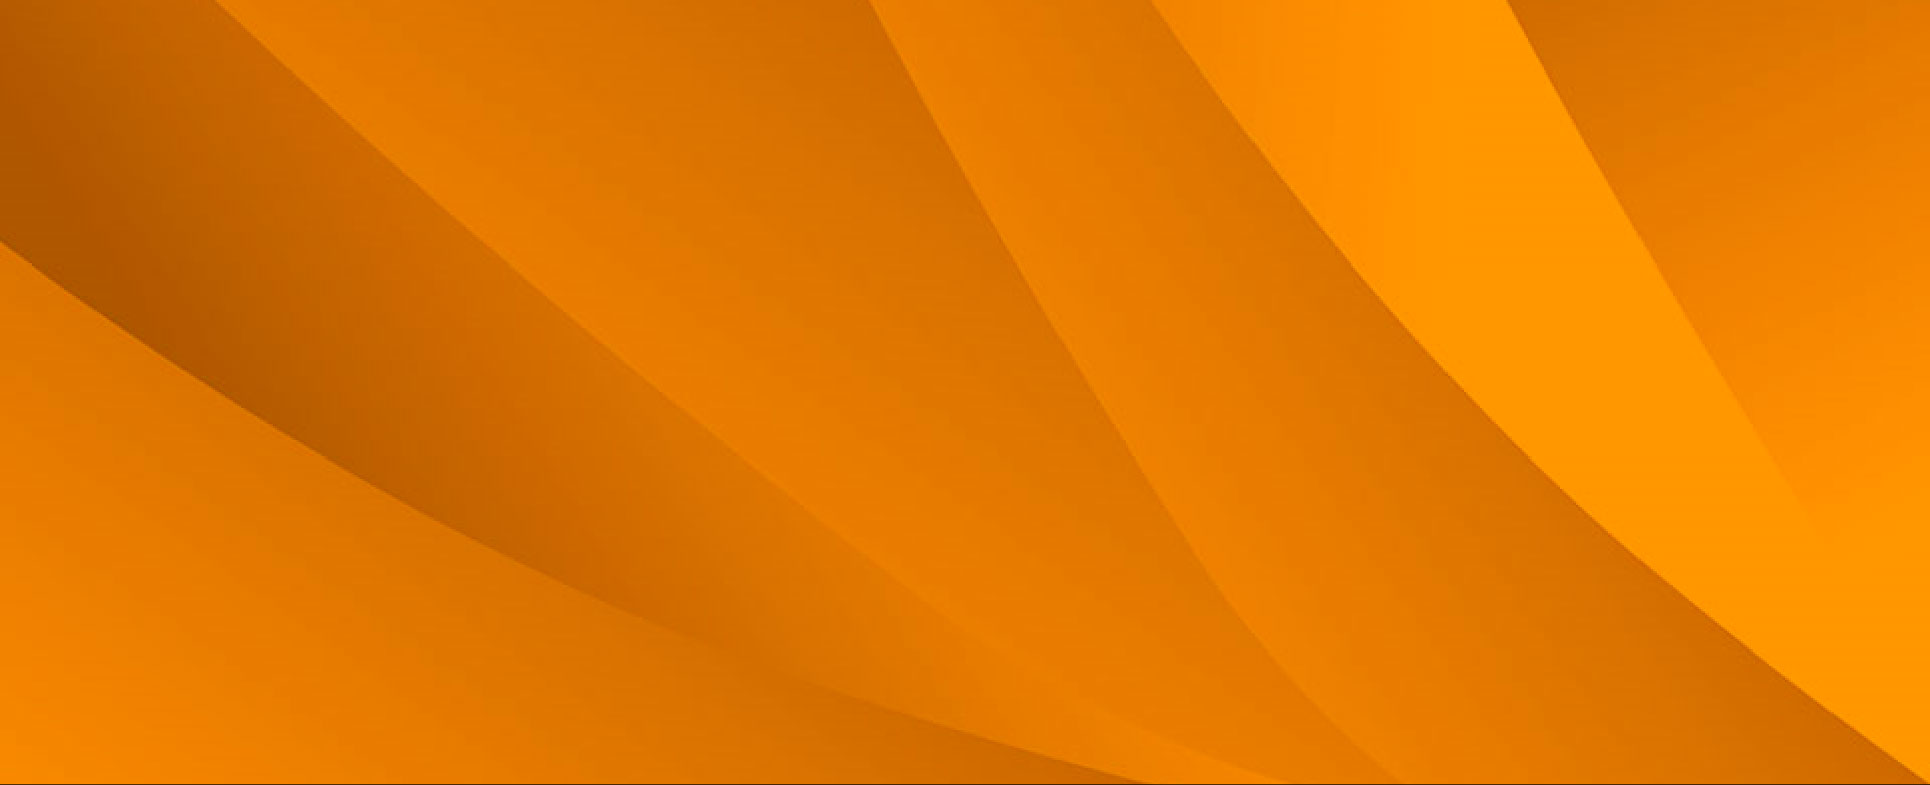 background_orange_abstract_01